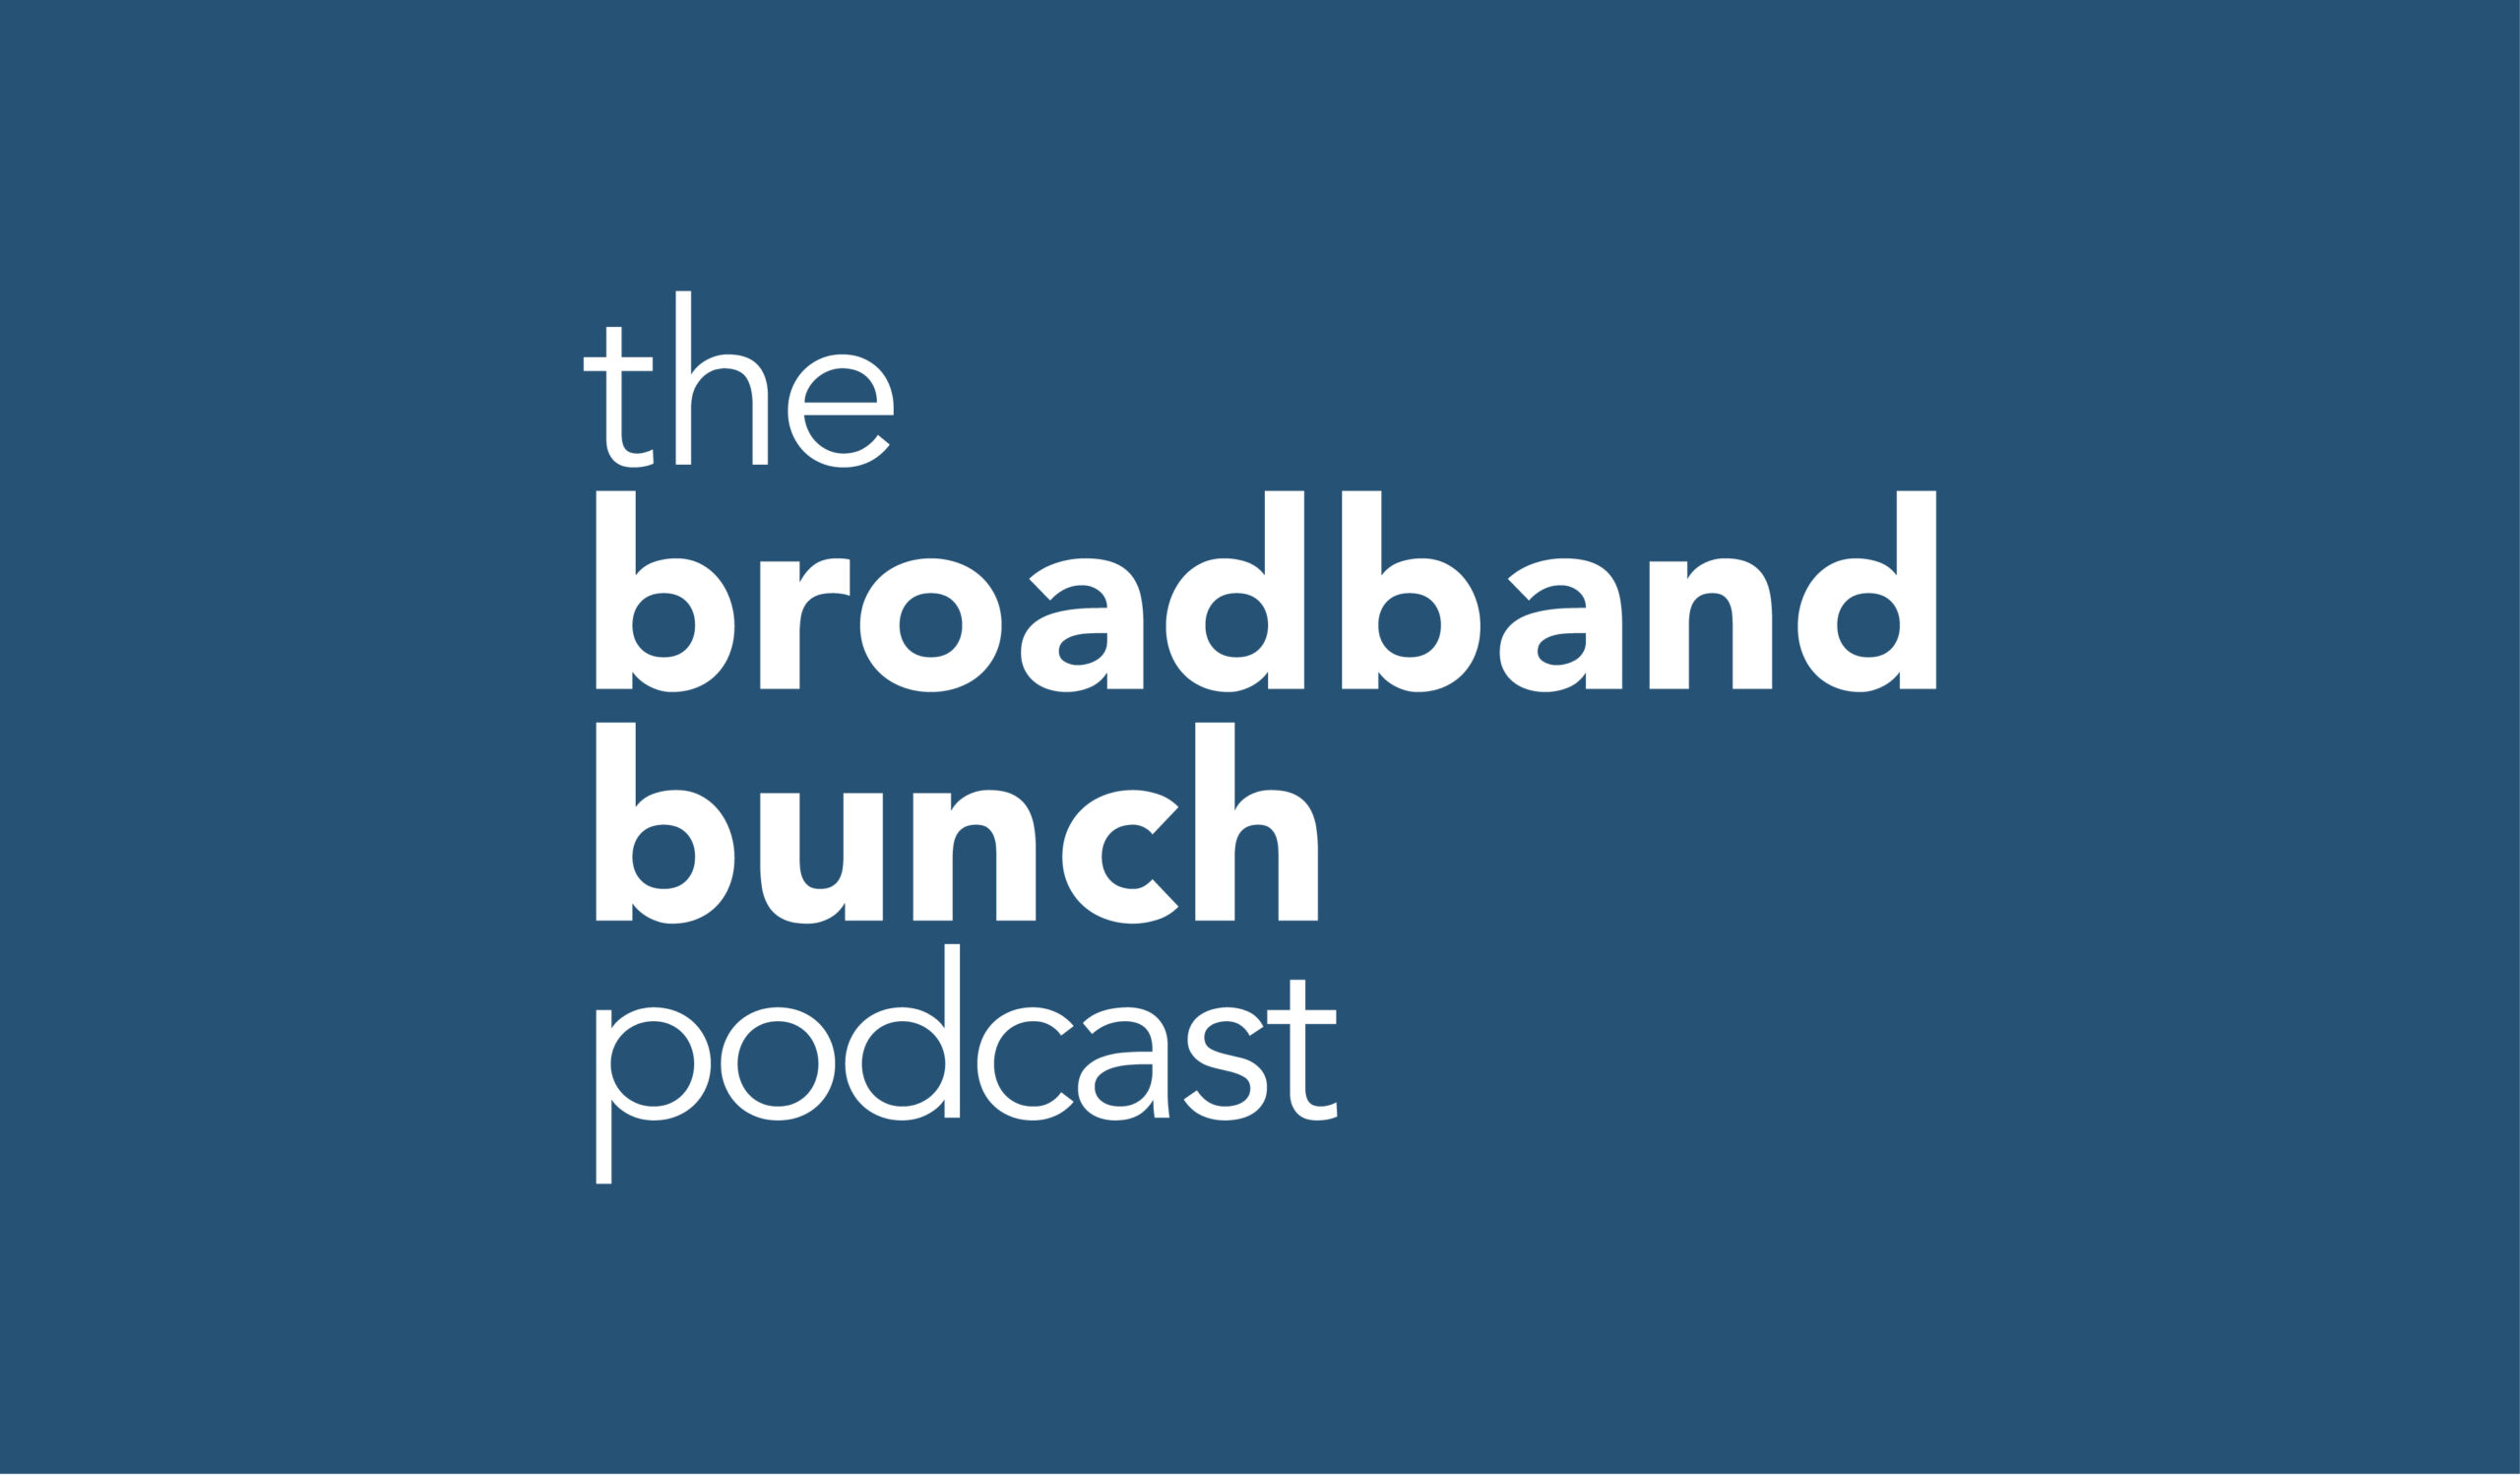 The Broadband Bunch Podcast logo.